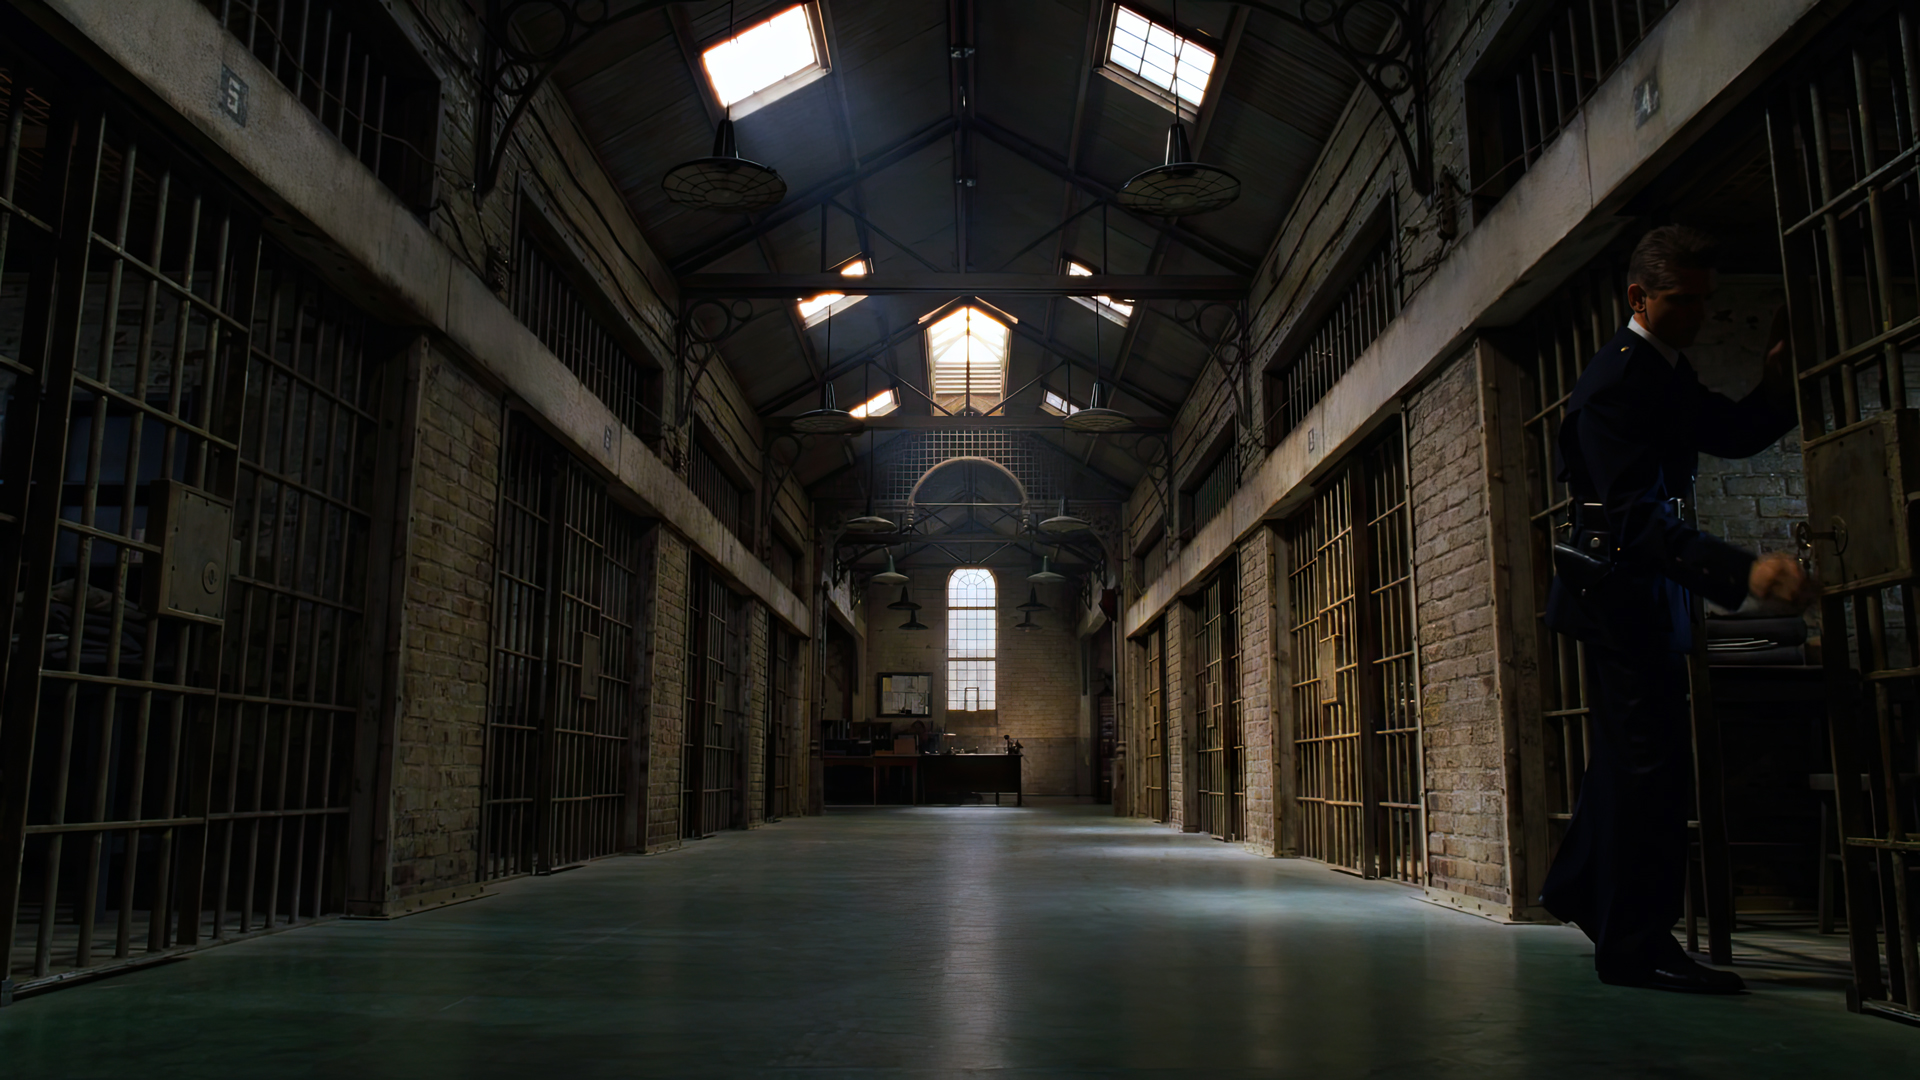 General 1920x1080 The Green Mile hallway movies film stills prison prison cell guard Stephen King